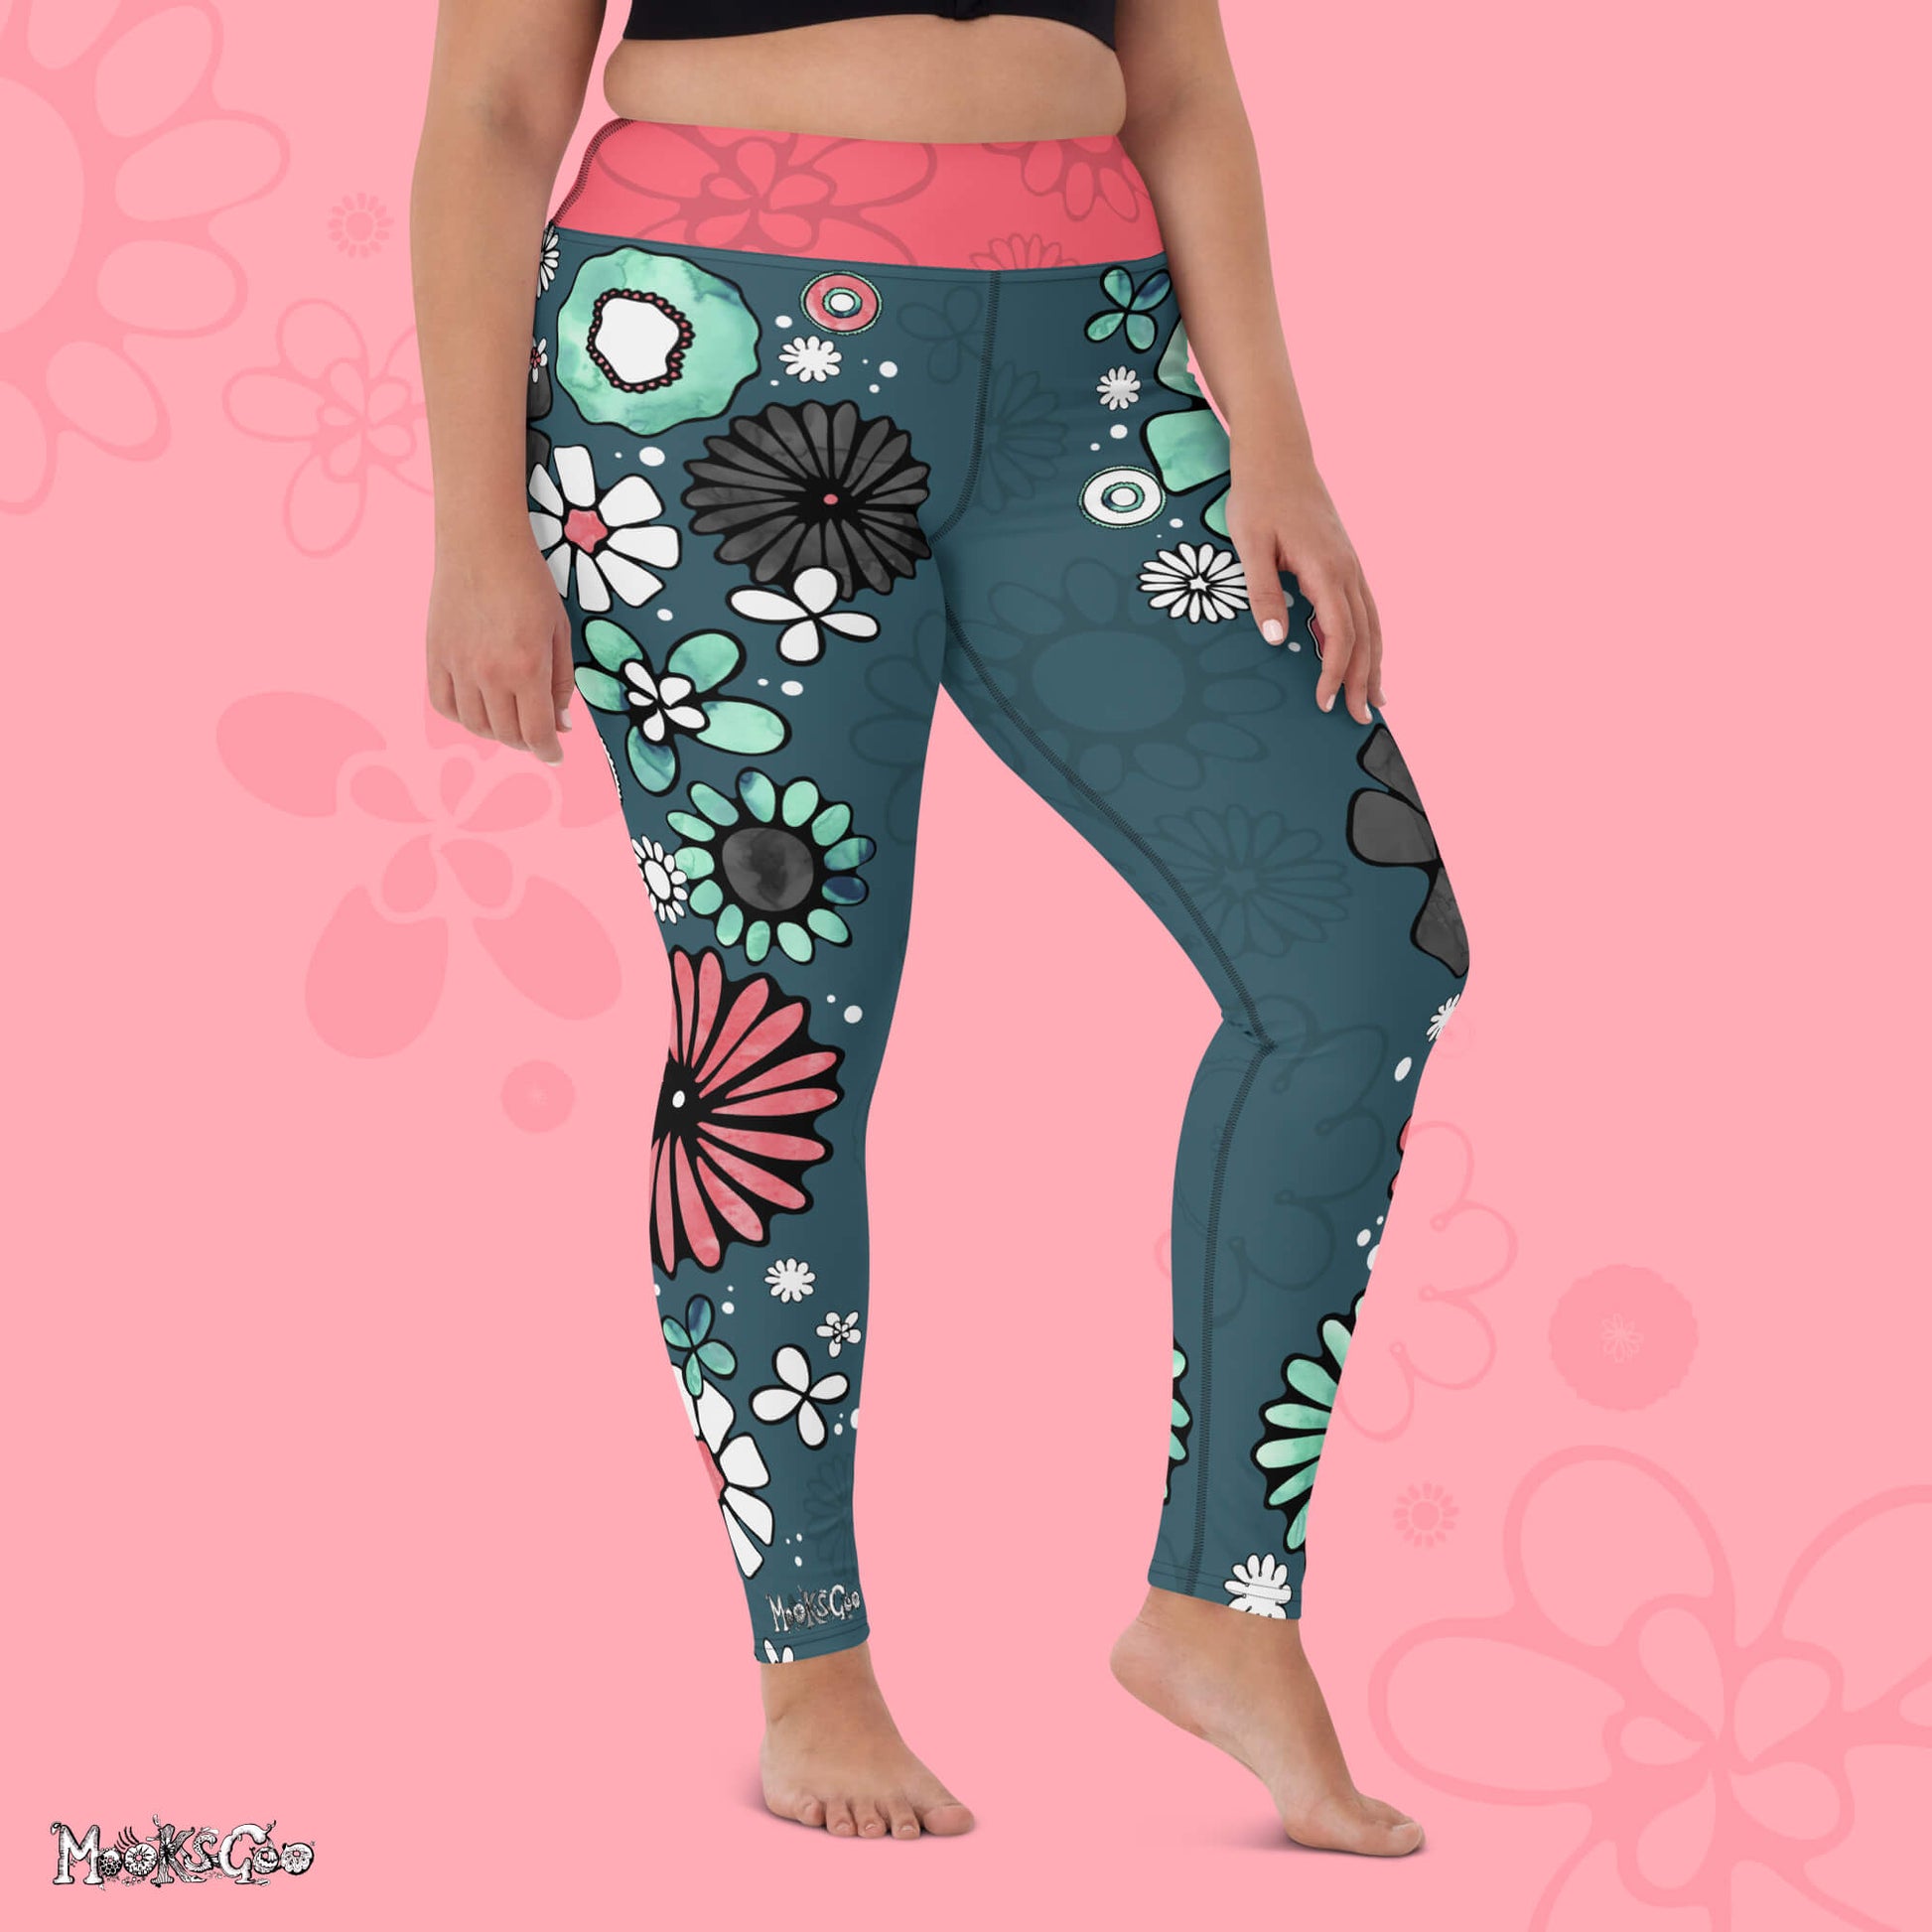 colorful printed yoga leggings by Tulipe Studio on : www..com/